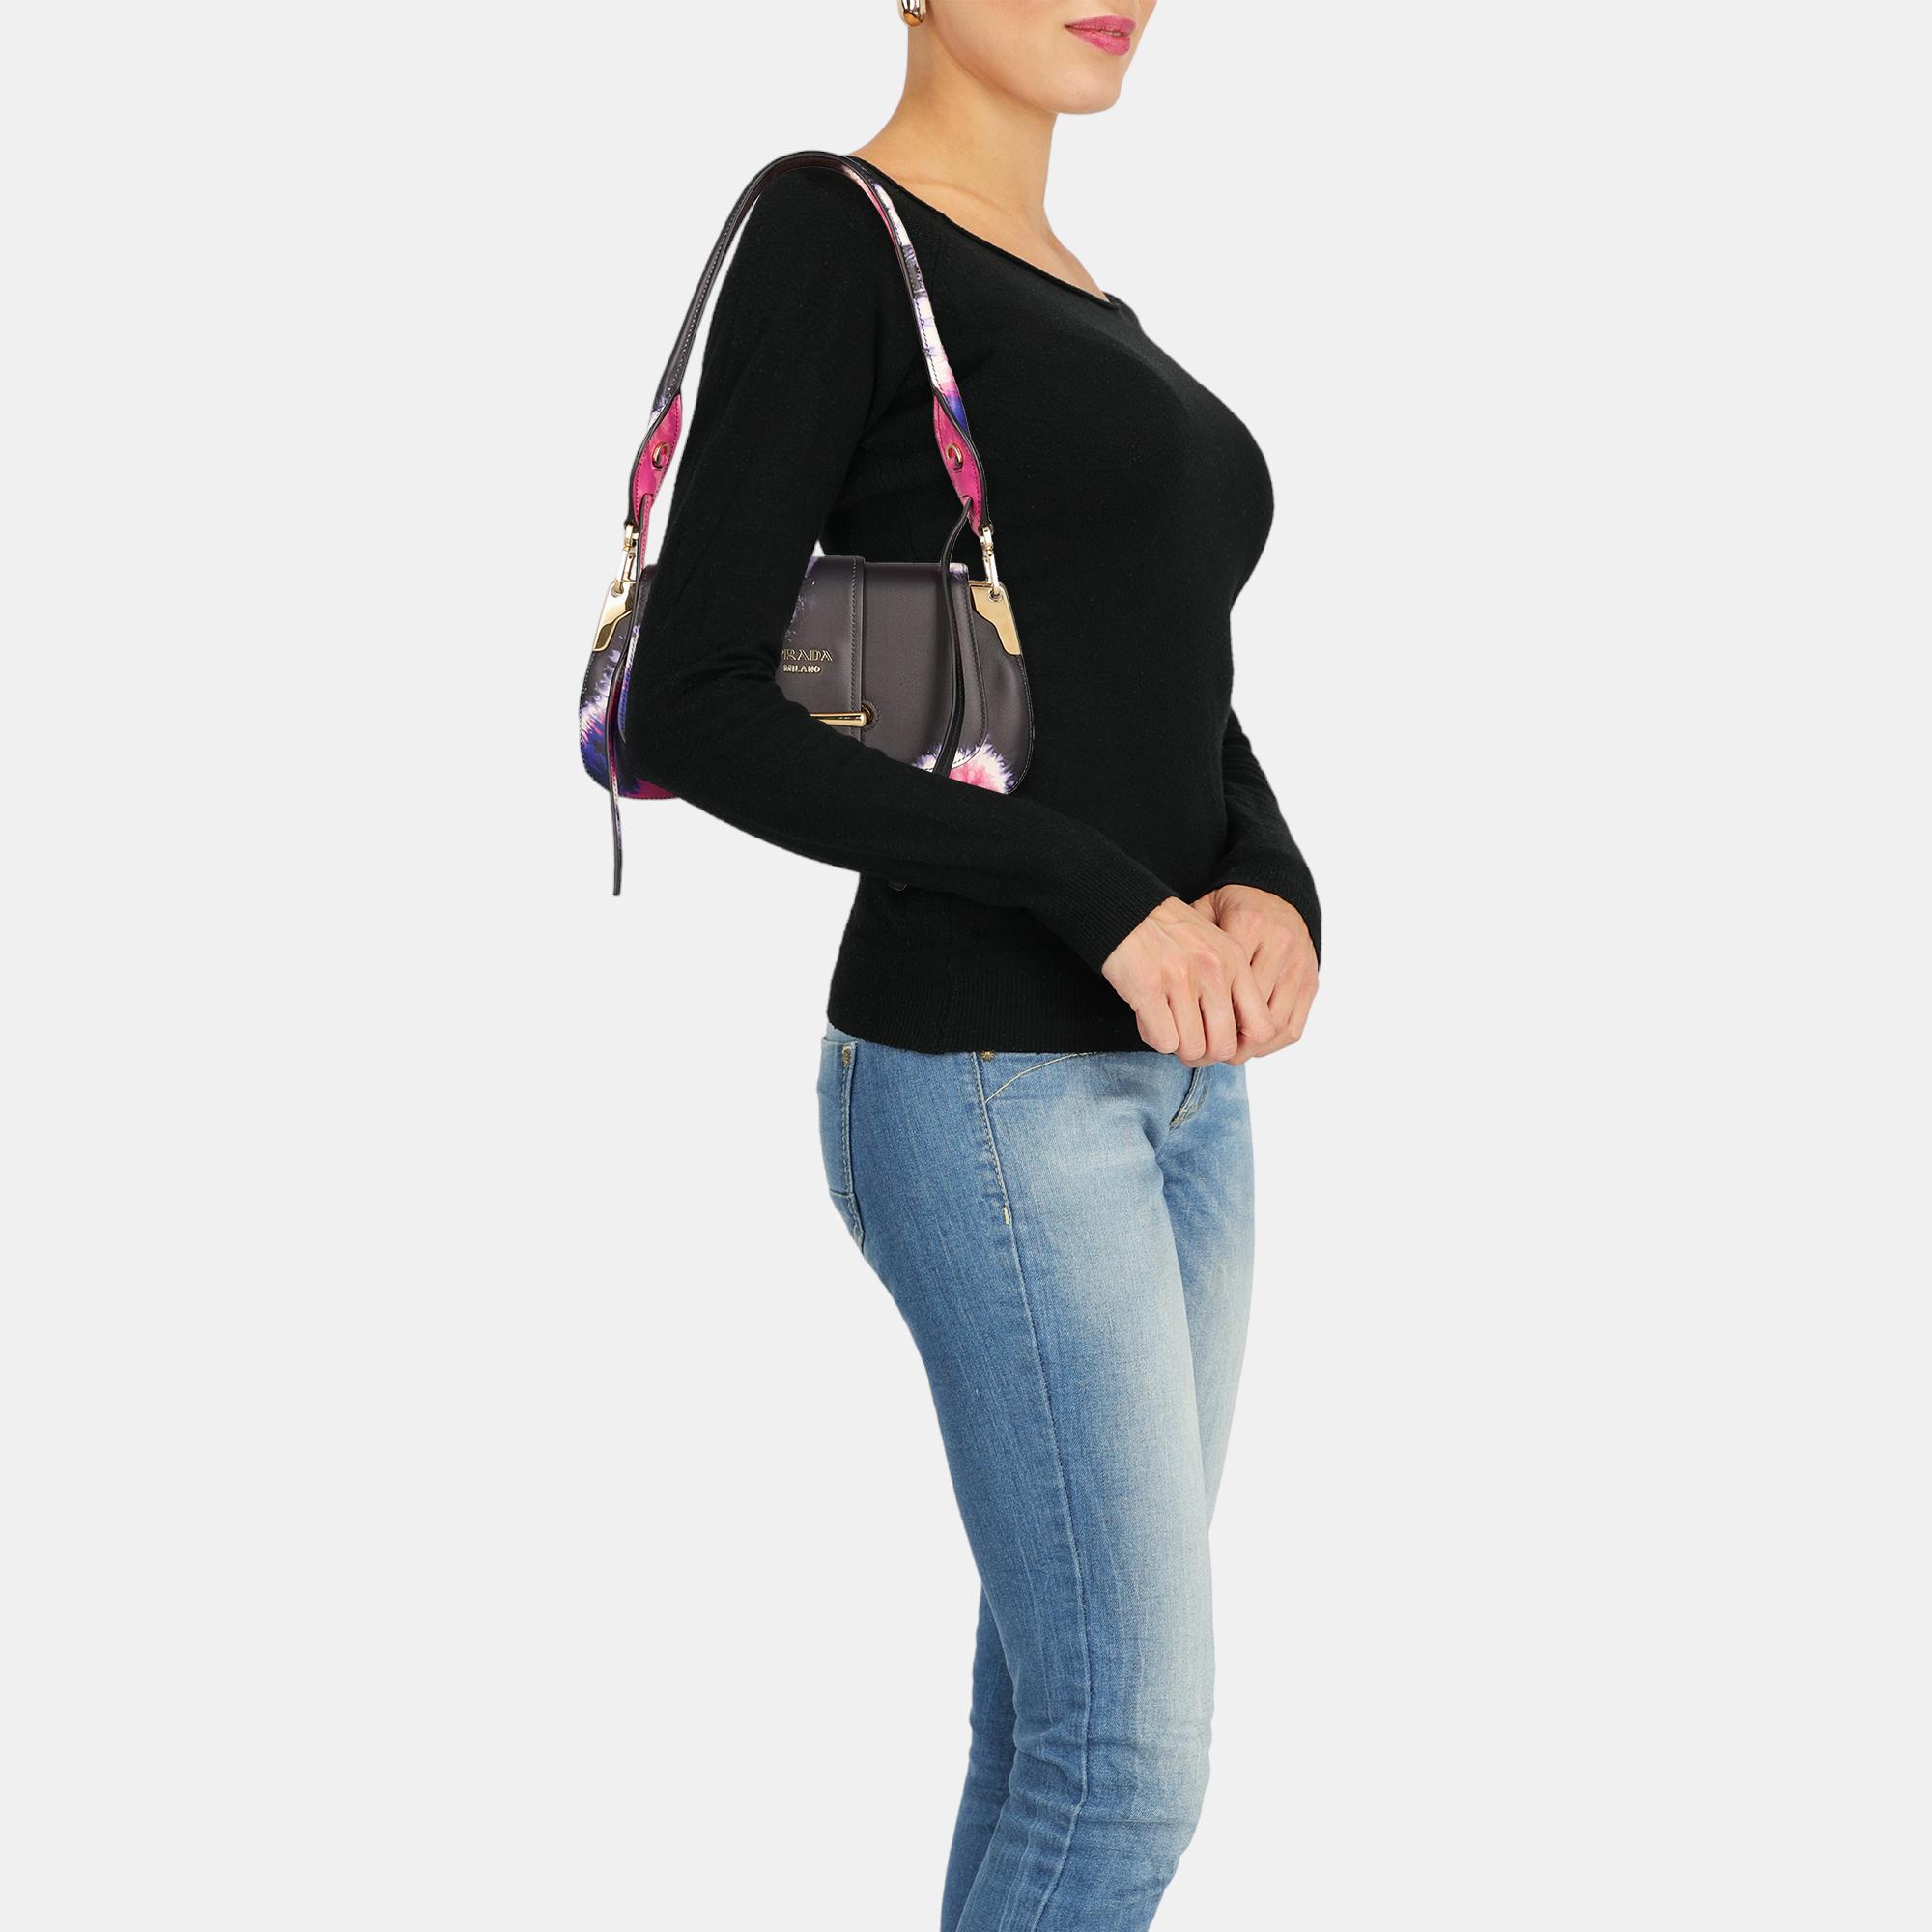 Prada  Women's Leather Hobo Bag - Black - One Size